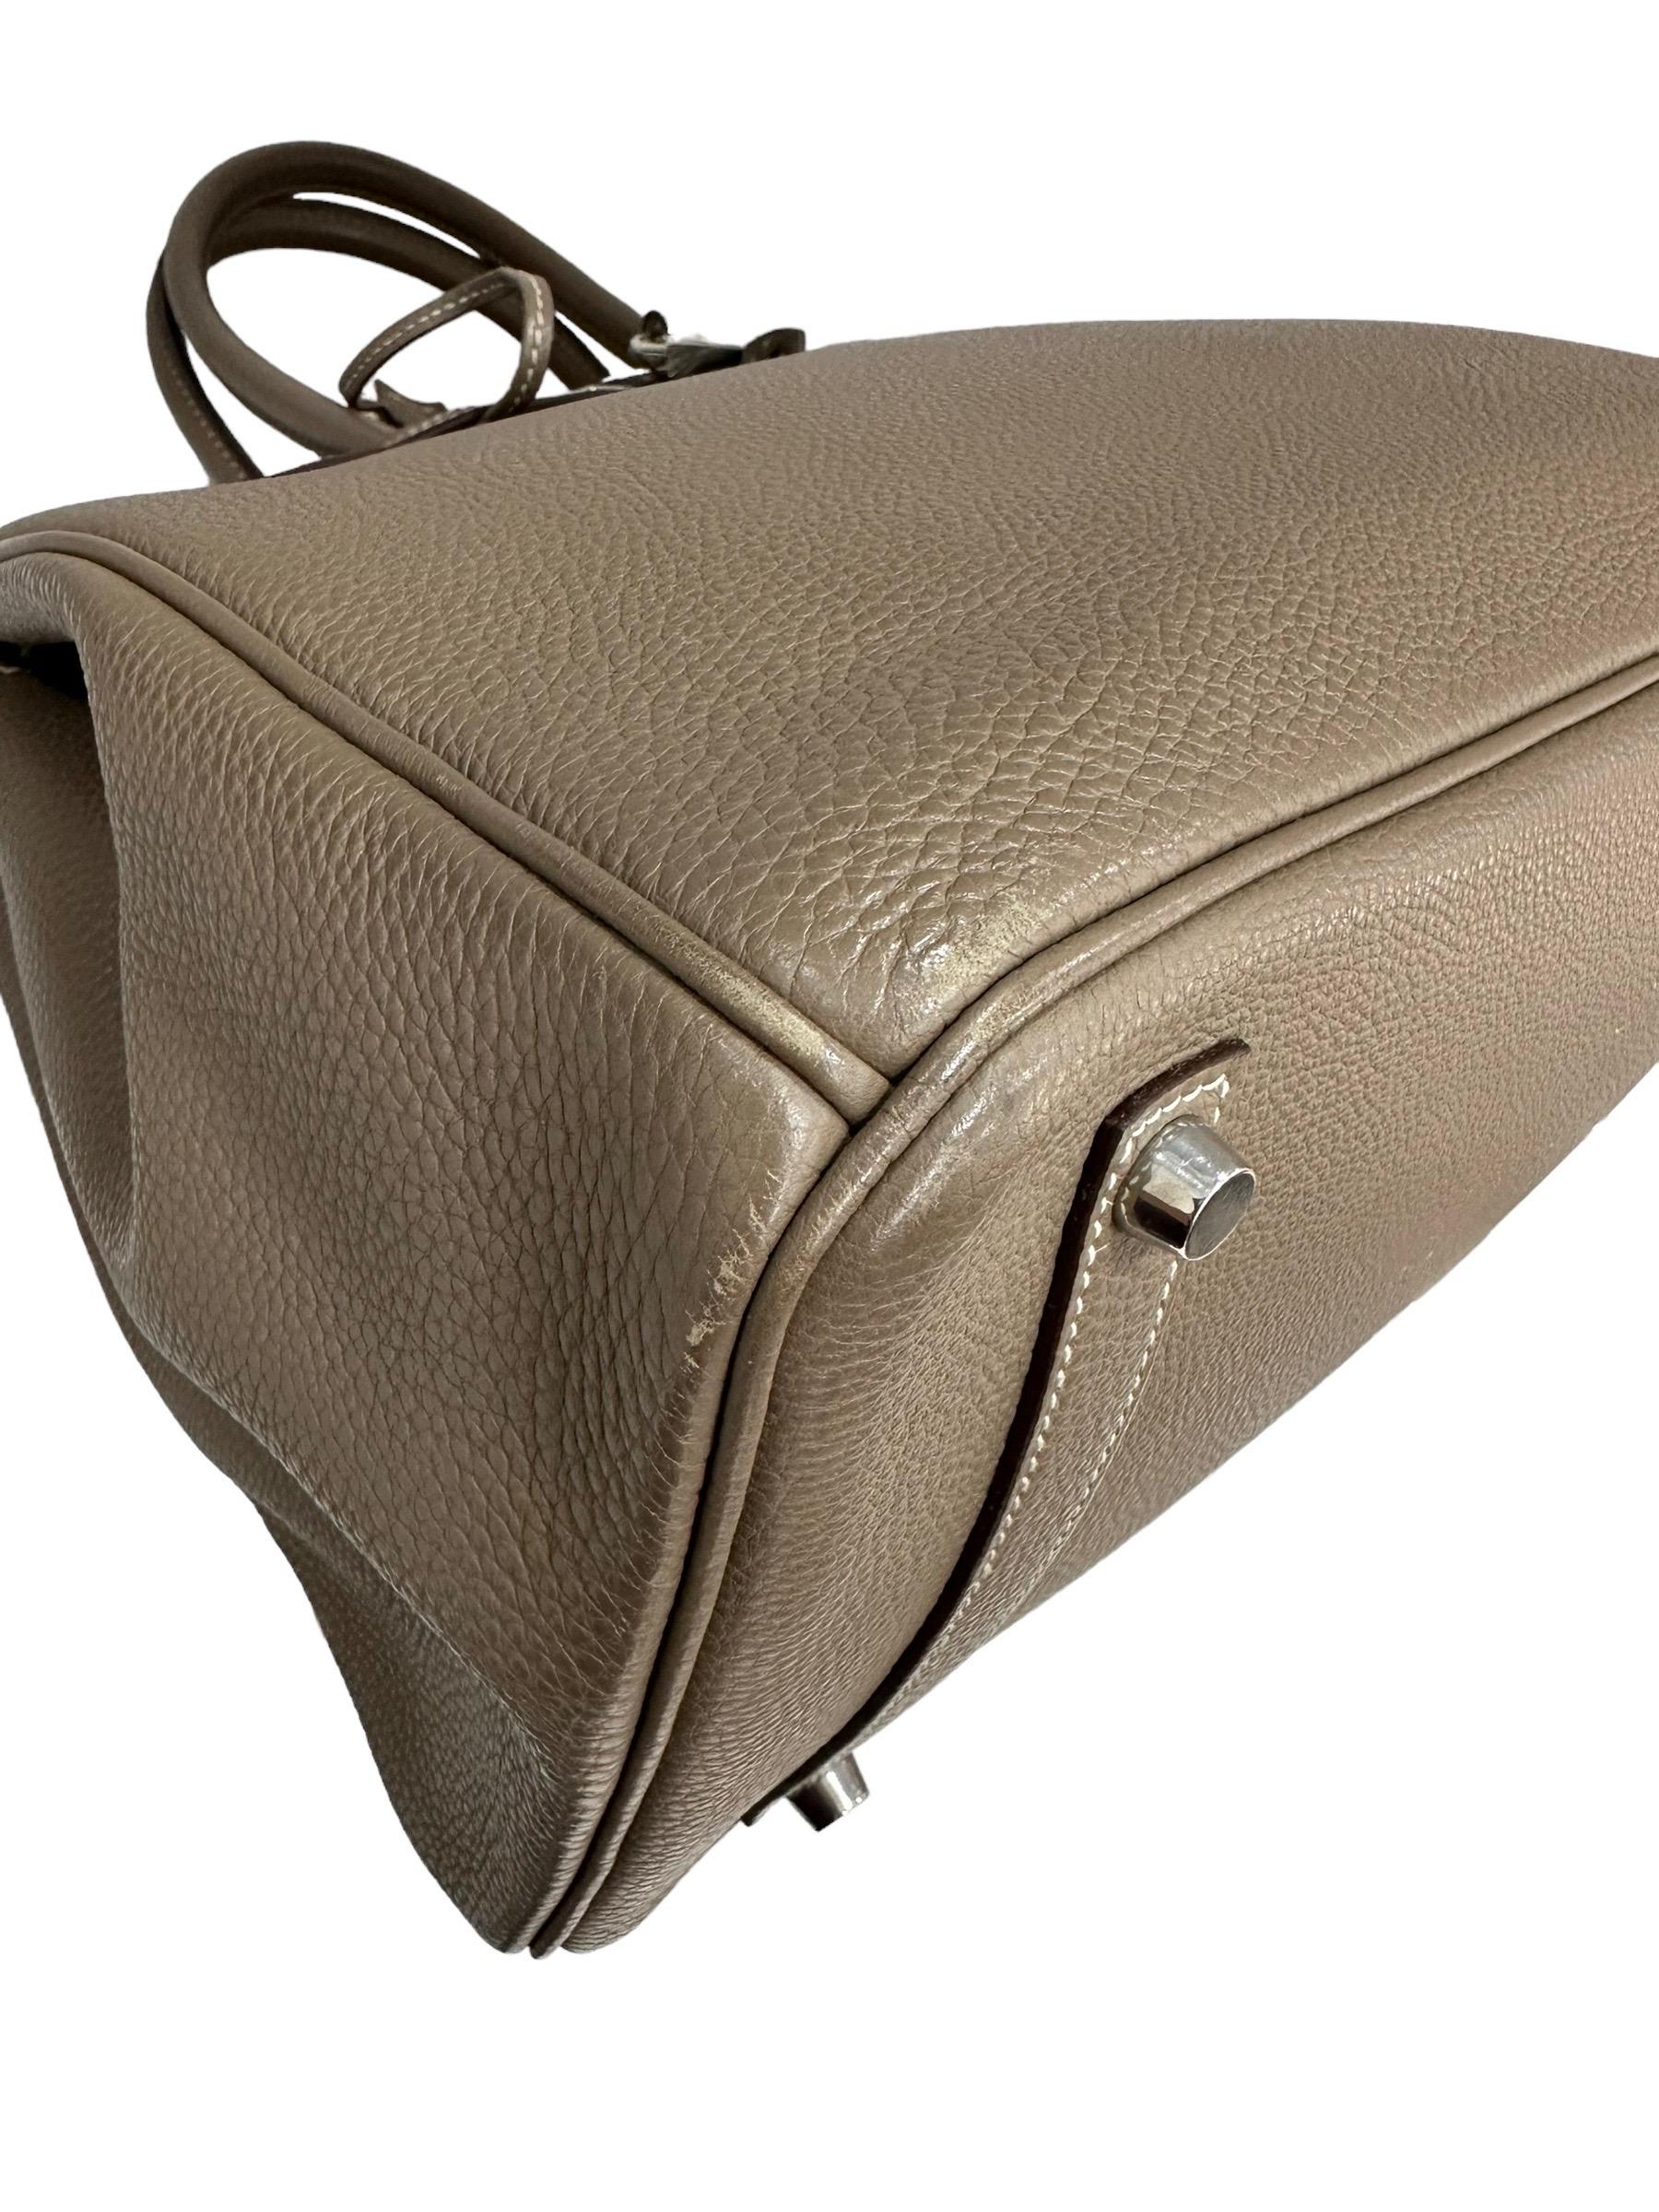 2008 Hermès Birkin 35 Togo Leather Toundra Top Handle Bag en vente 9